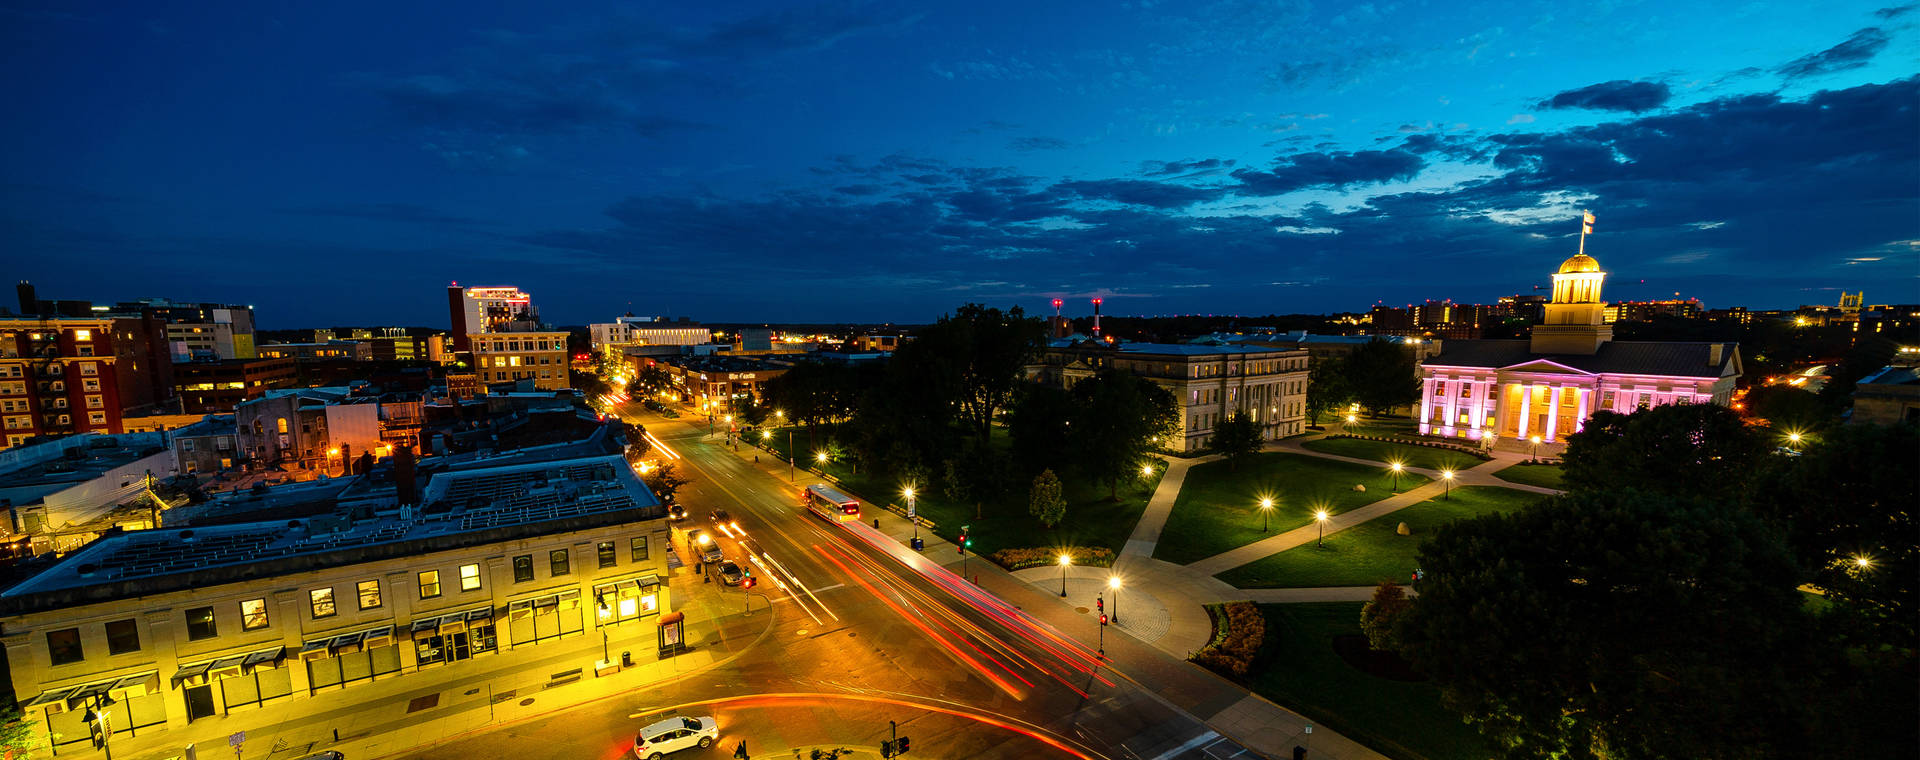 University Of Iowa Nighttime View Wallpaper